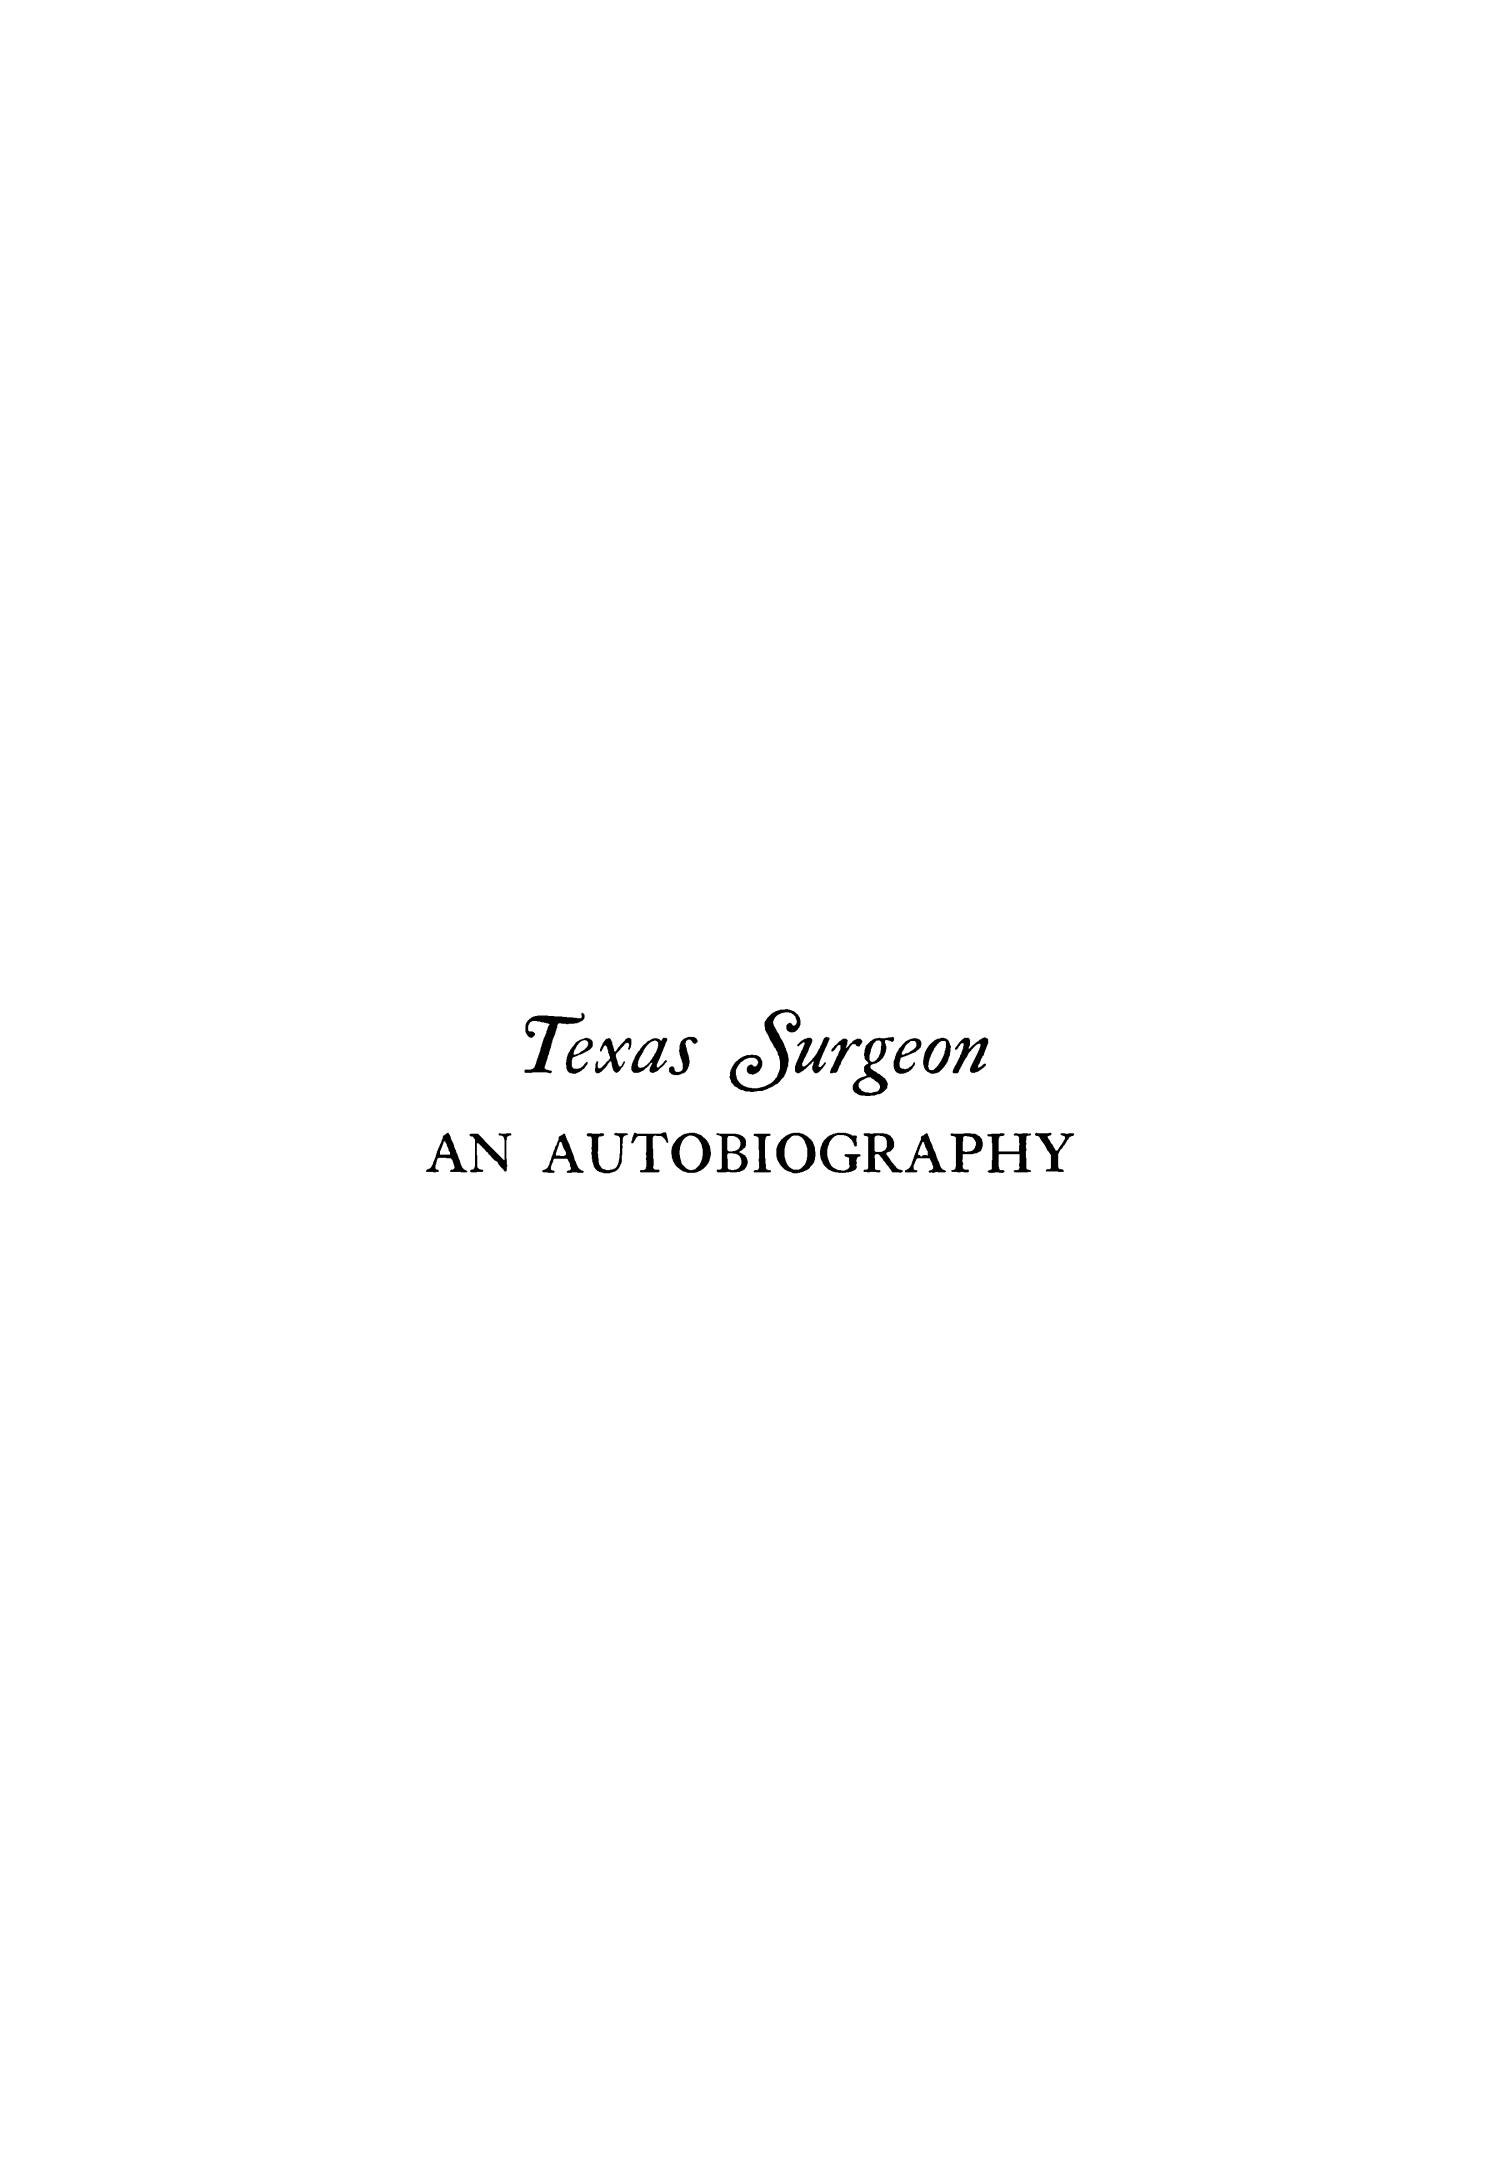 Texas Surgeon: an Autobiography
                                                
                                                    1
                                                